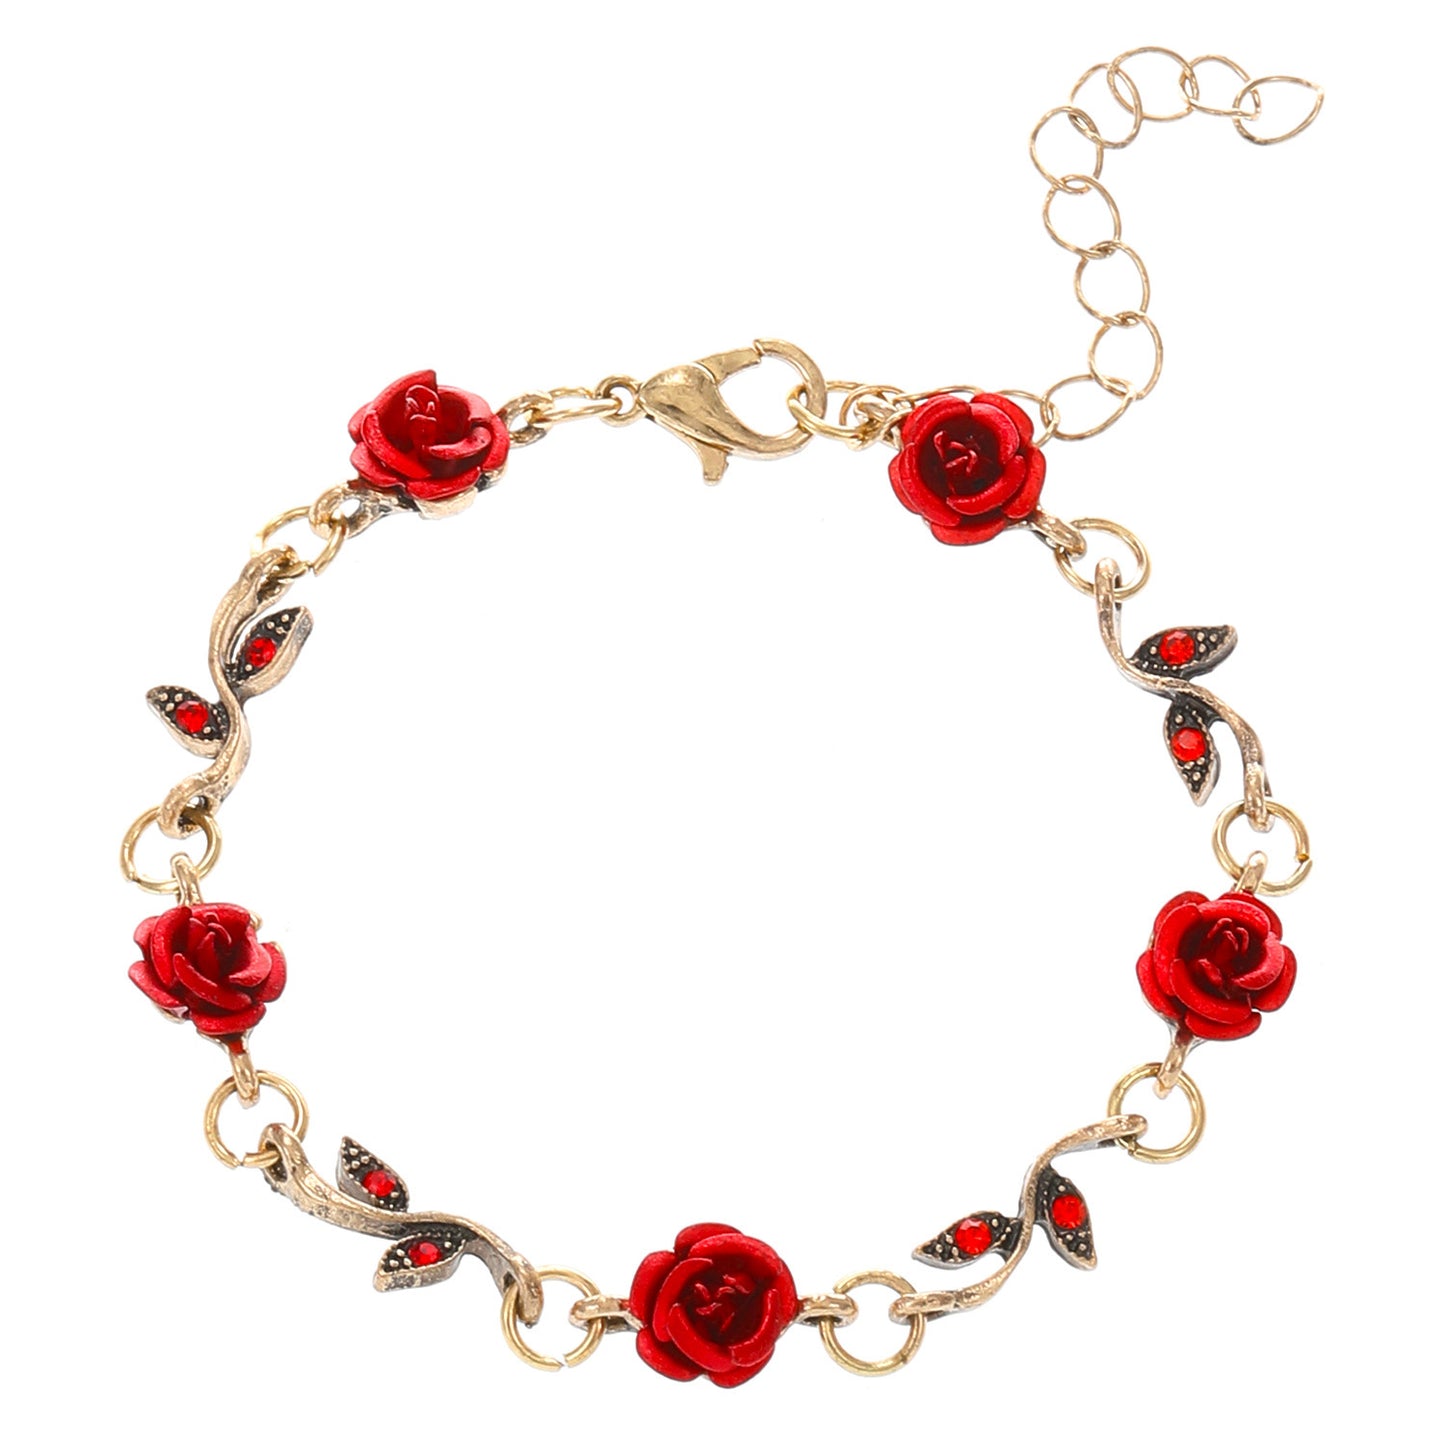 1pc Red Rose Flower Decor Chain Bracelet, Elegant Halloween Christmas Party Gift Accessories Golden